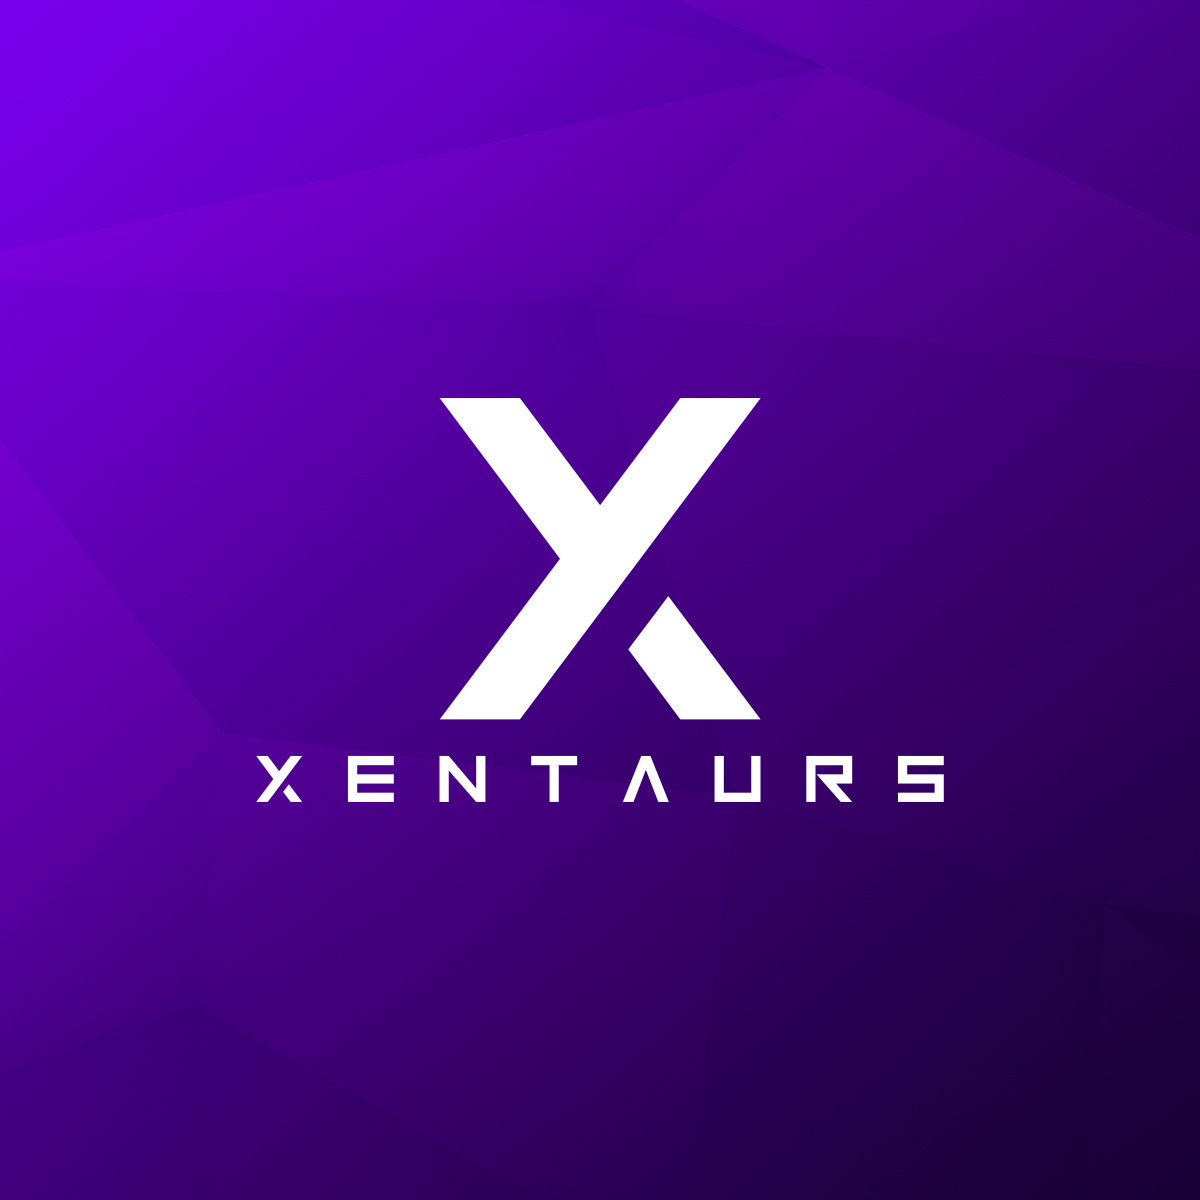 Xentaurs LLC